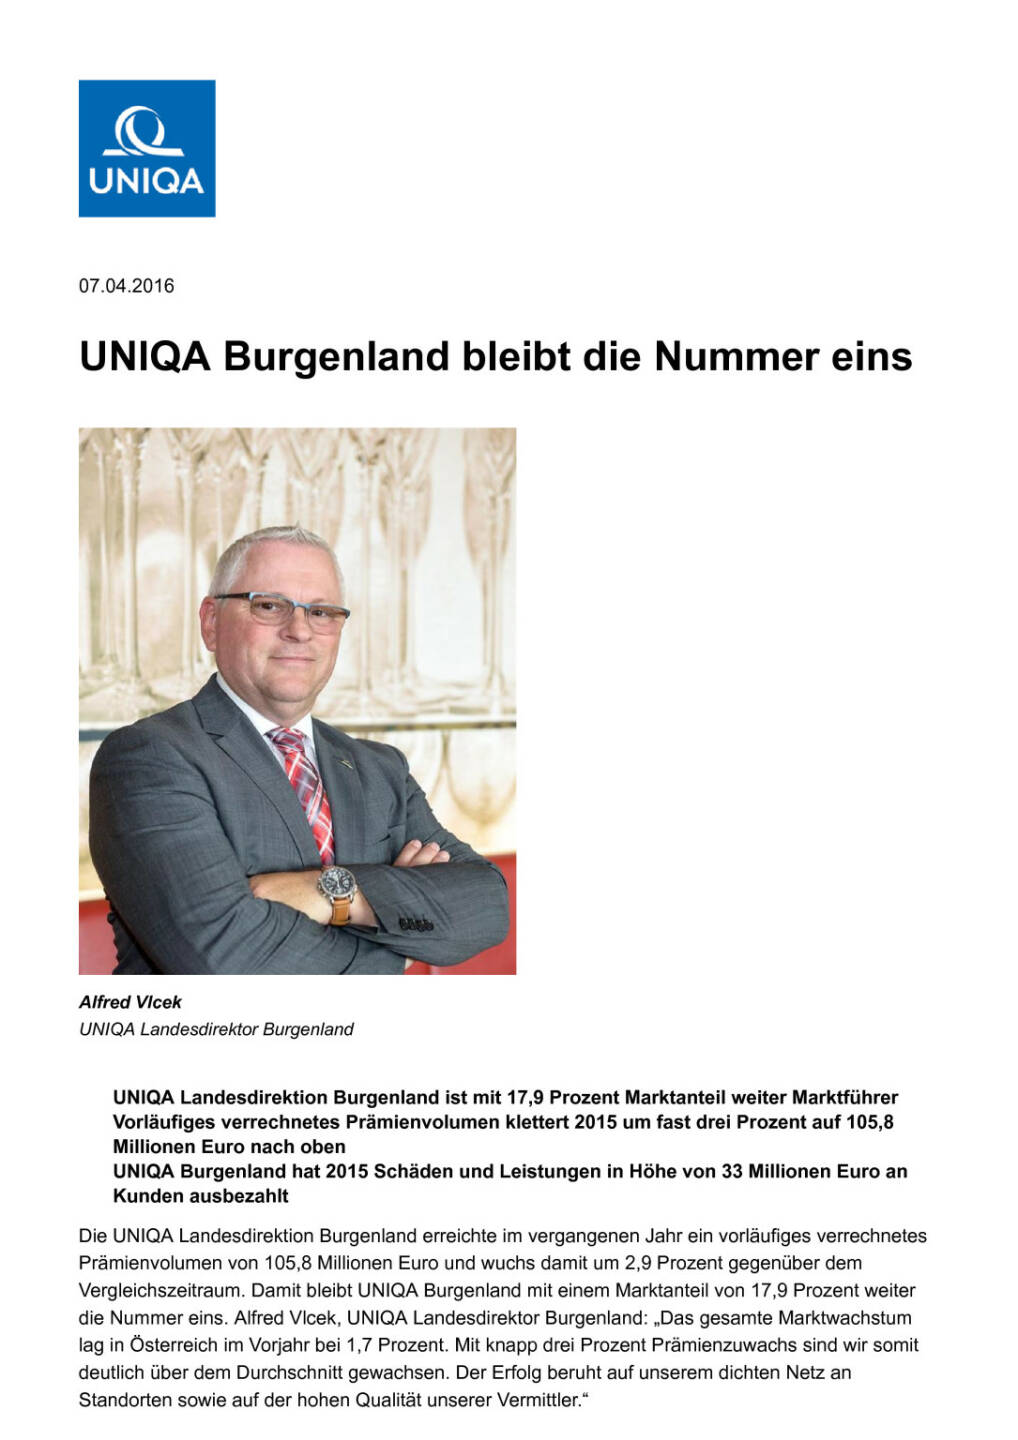 Uniqa Burgenland an der Spitze, Seite 1/3, komplettes Dokument unter http://boerse-social.com/static/uploads/file_857_uniqa_burgenland_an_der_spitze.pdf